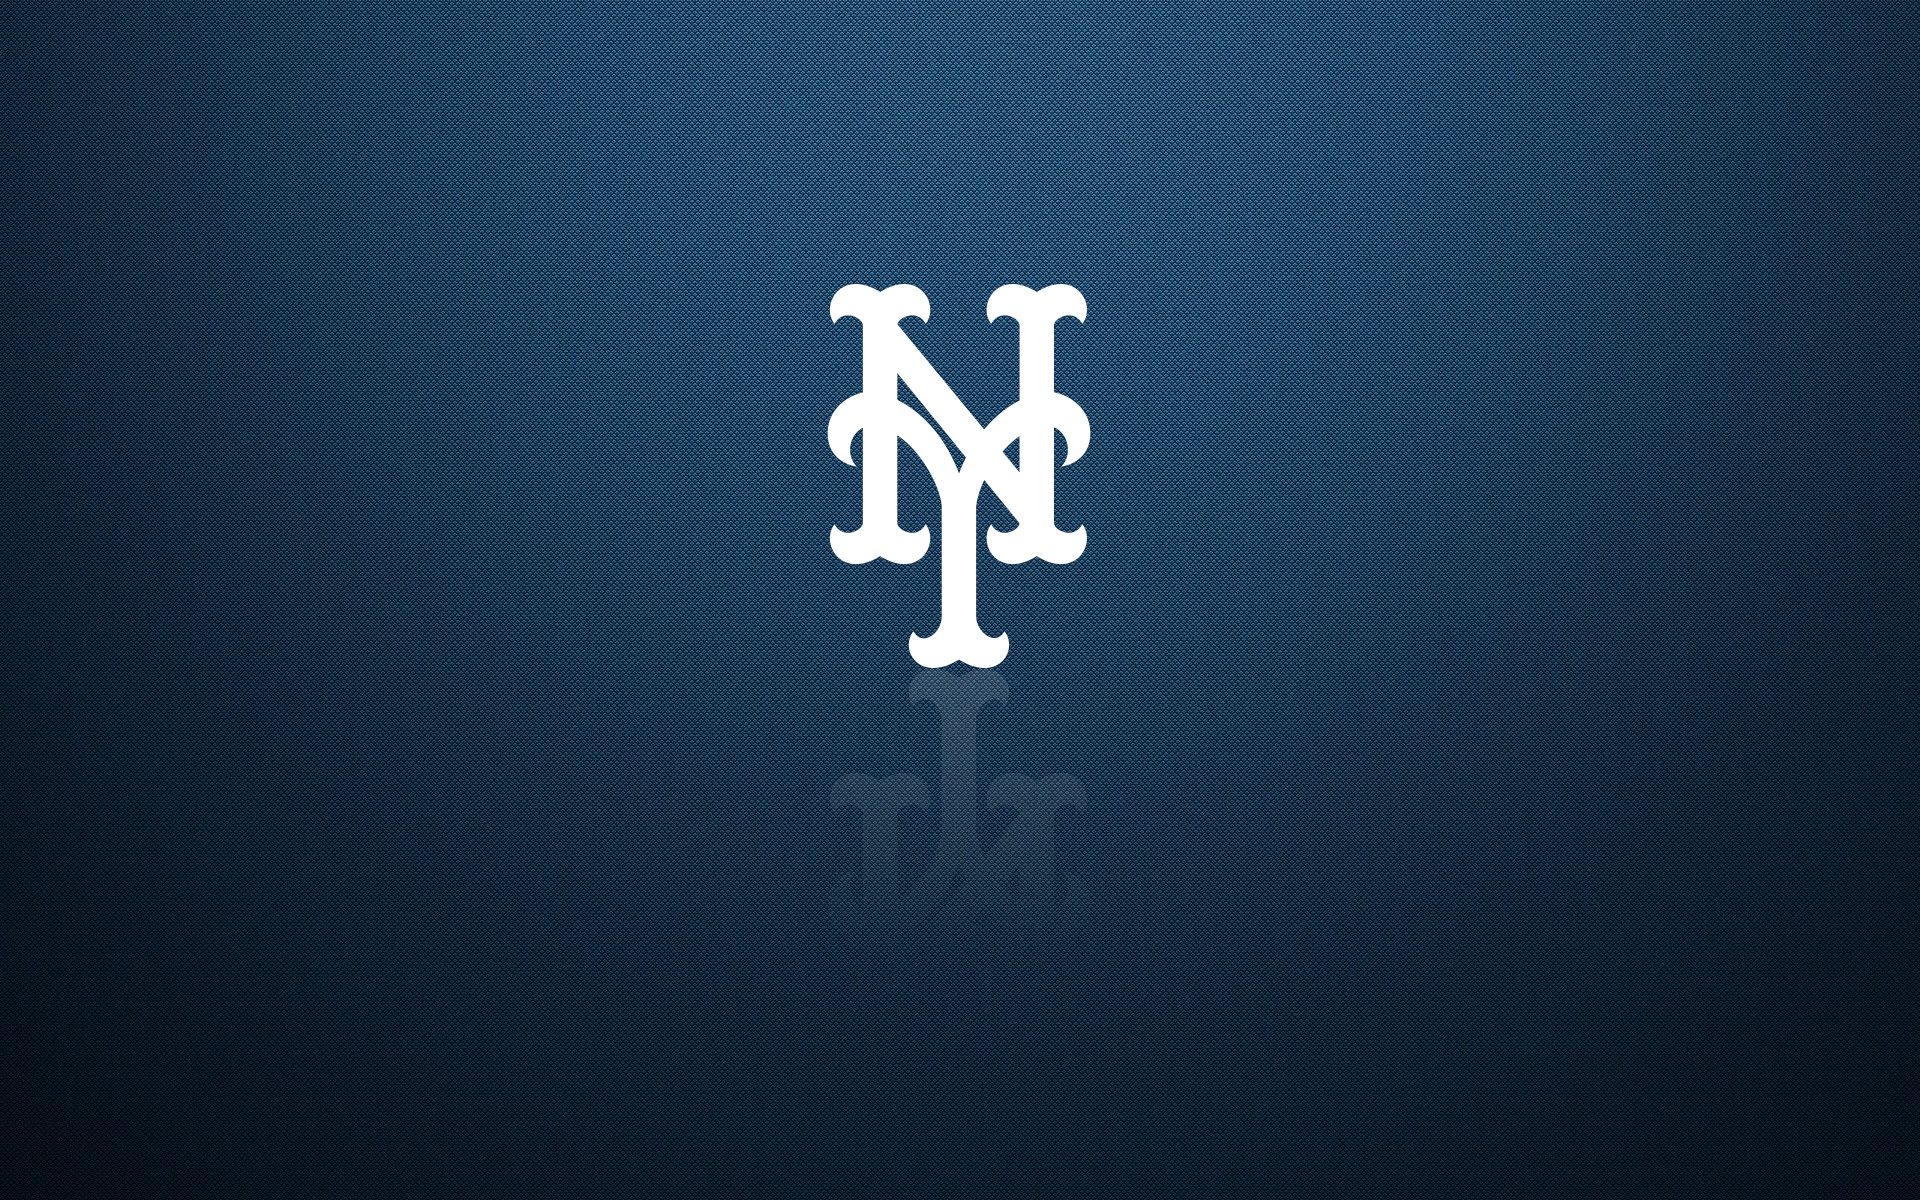 Download New York Mets On Fire Wallpaper